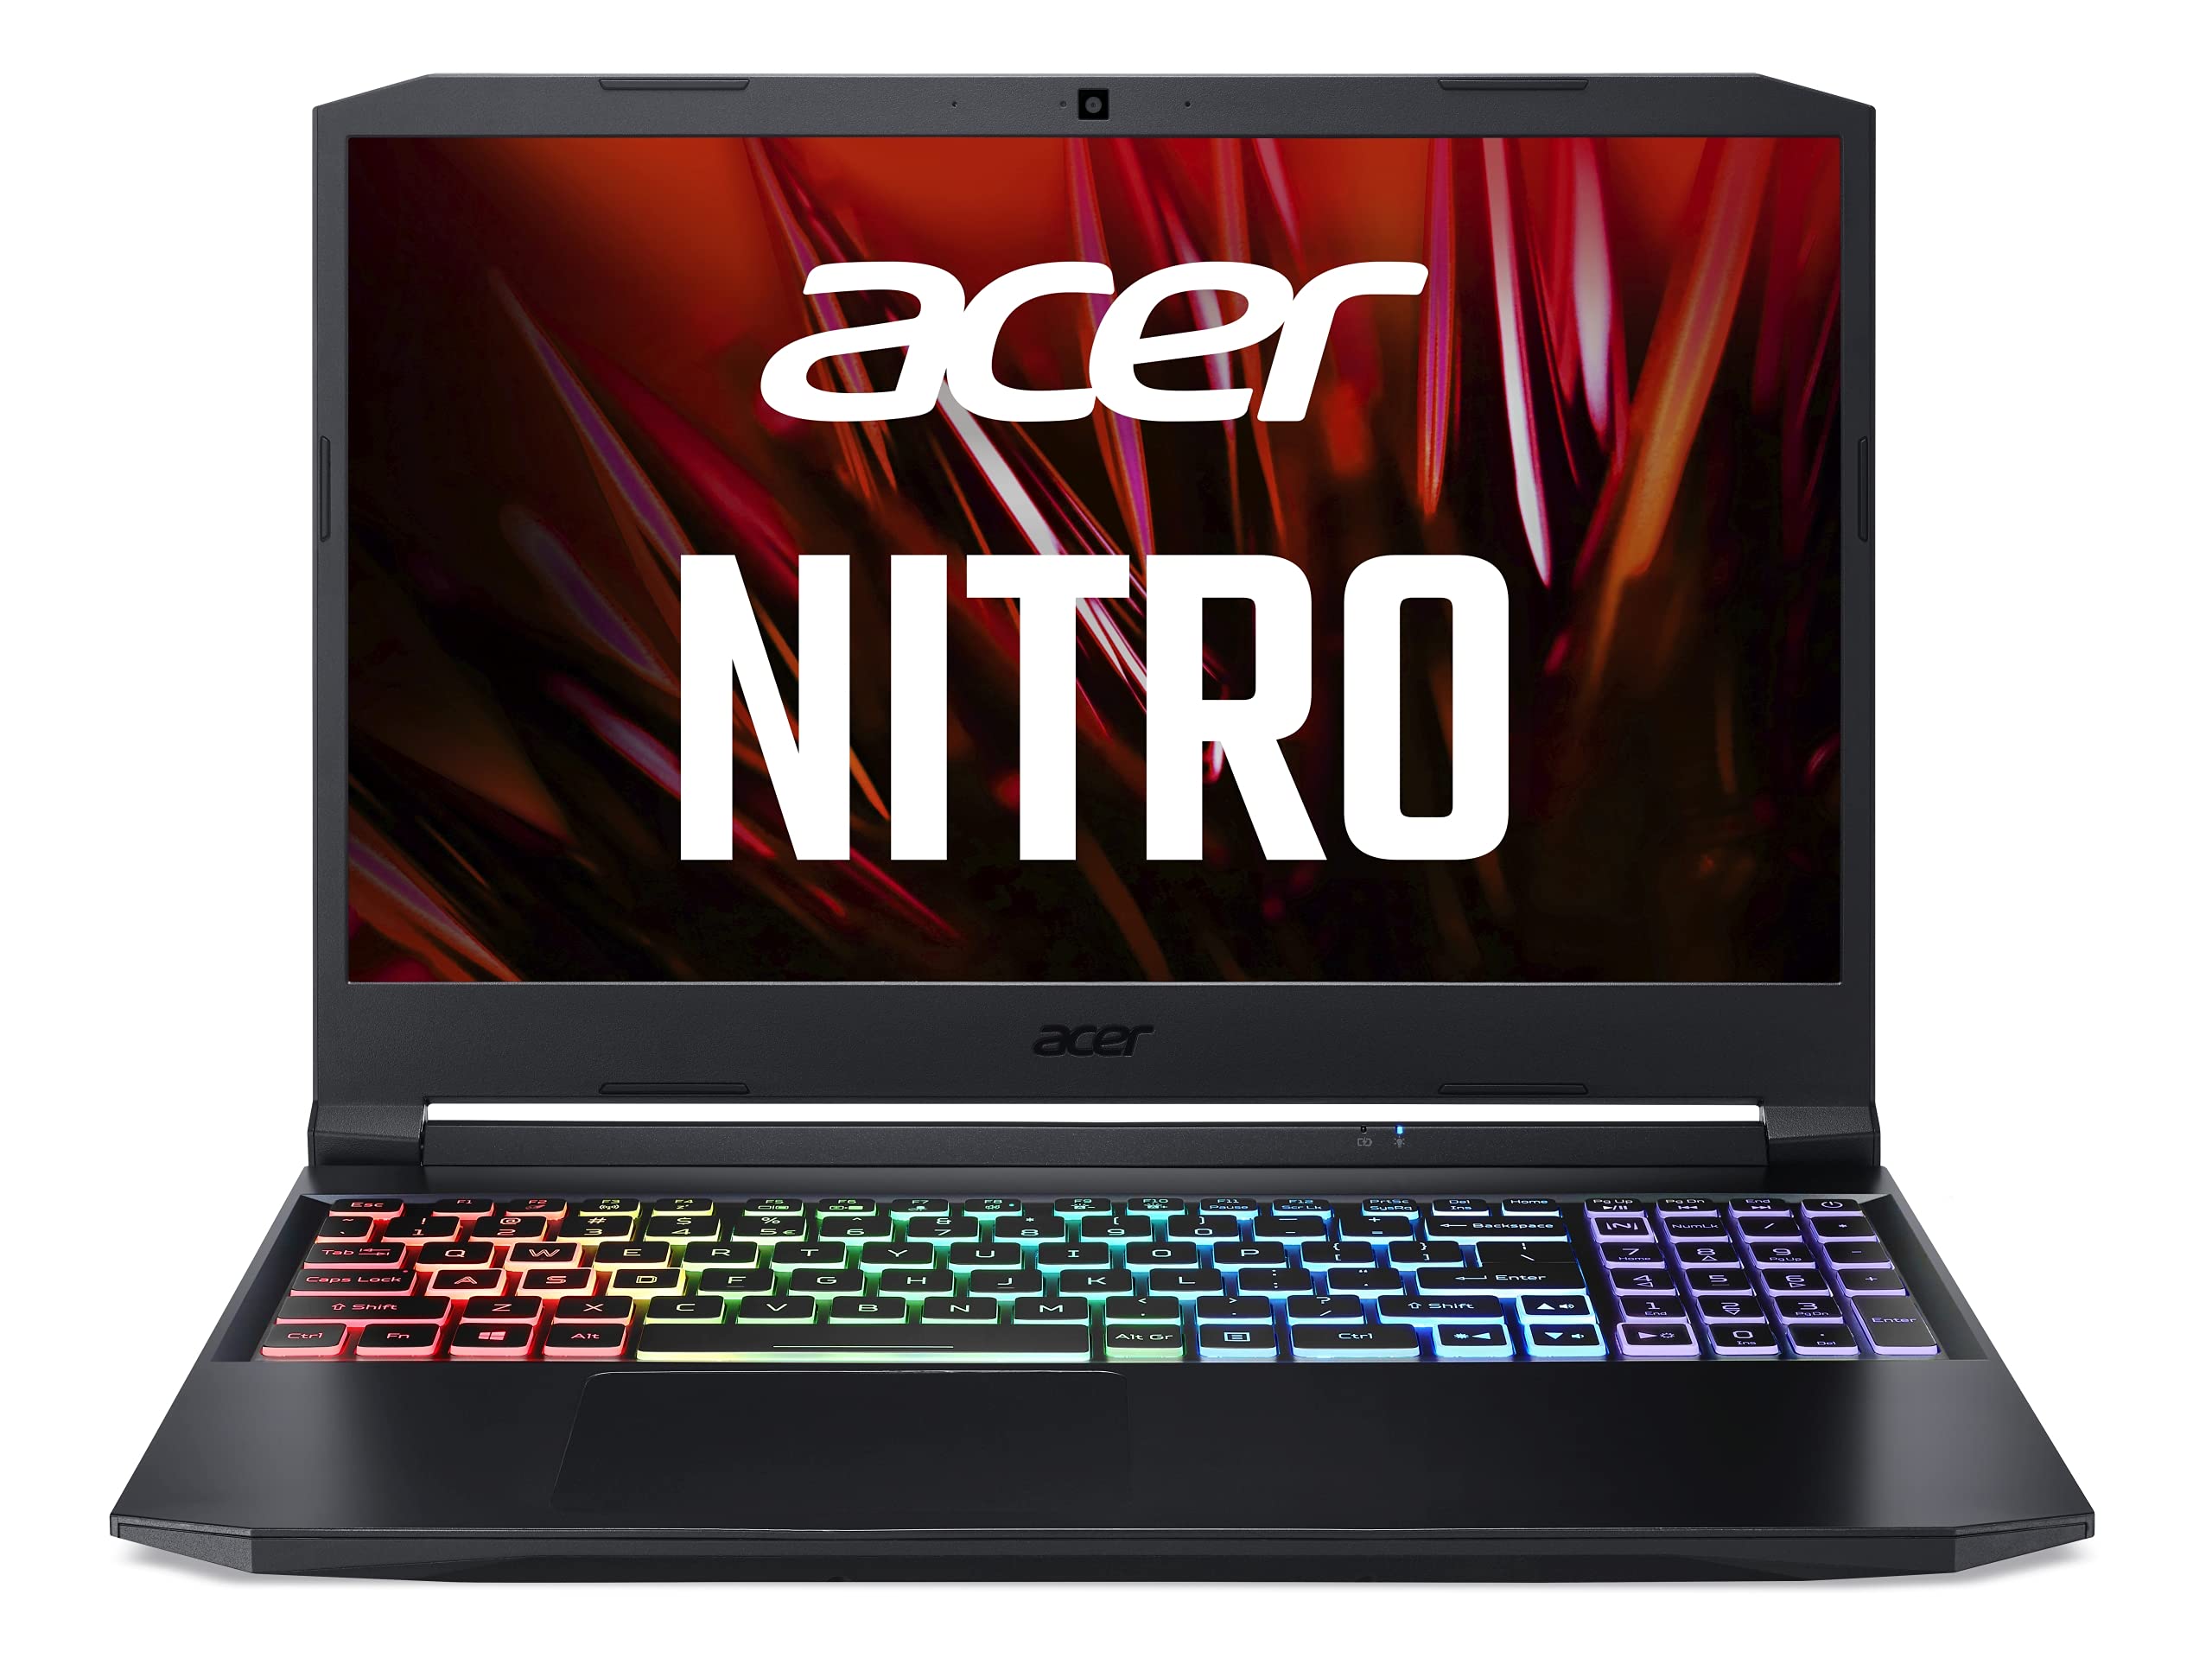 Acer Nitro 5 (AN515-45-R952) Gaming Laptop 15.6 Zoll Windows 11 - FHD 144 Hz IPS Display, AMD Ryzen 9 5900HX, 16 GB DDR4 RAM, 1 TB PCIe SSD, NVIDIA GeForce RTX 3070 - 8 GB GDDR6